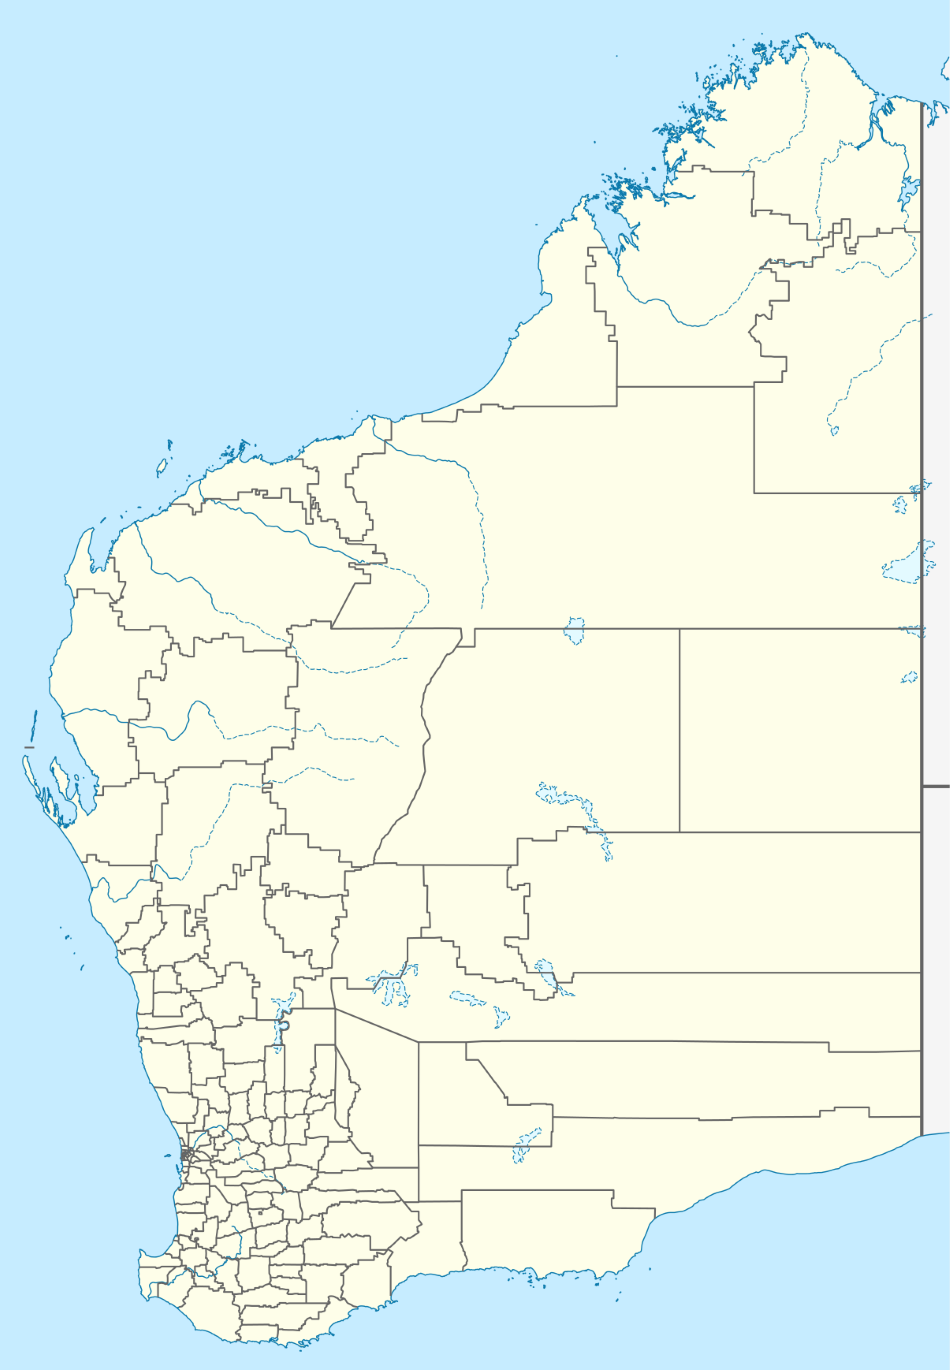 Západní Austrálie s vyznačenou polohou kráteru Yarrabubba, NordNordWest [CC BY-SA 3.0 DE (https://creativecommons.org/licenses/by-sa/3.0/de/deed.en)].